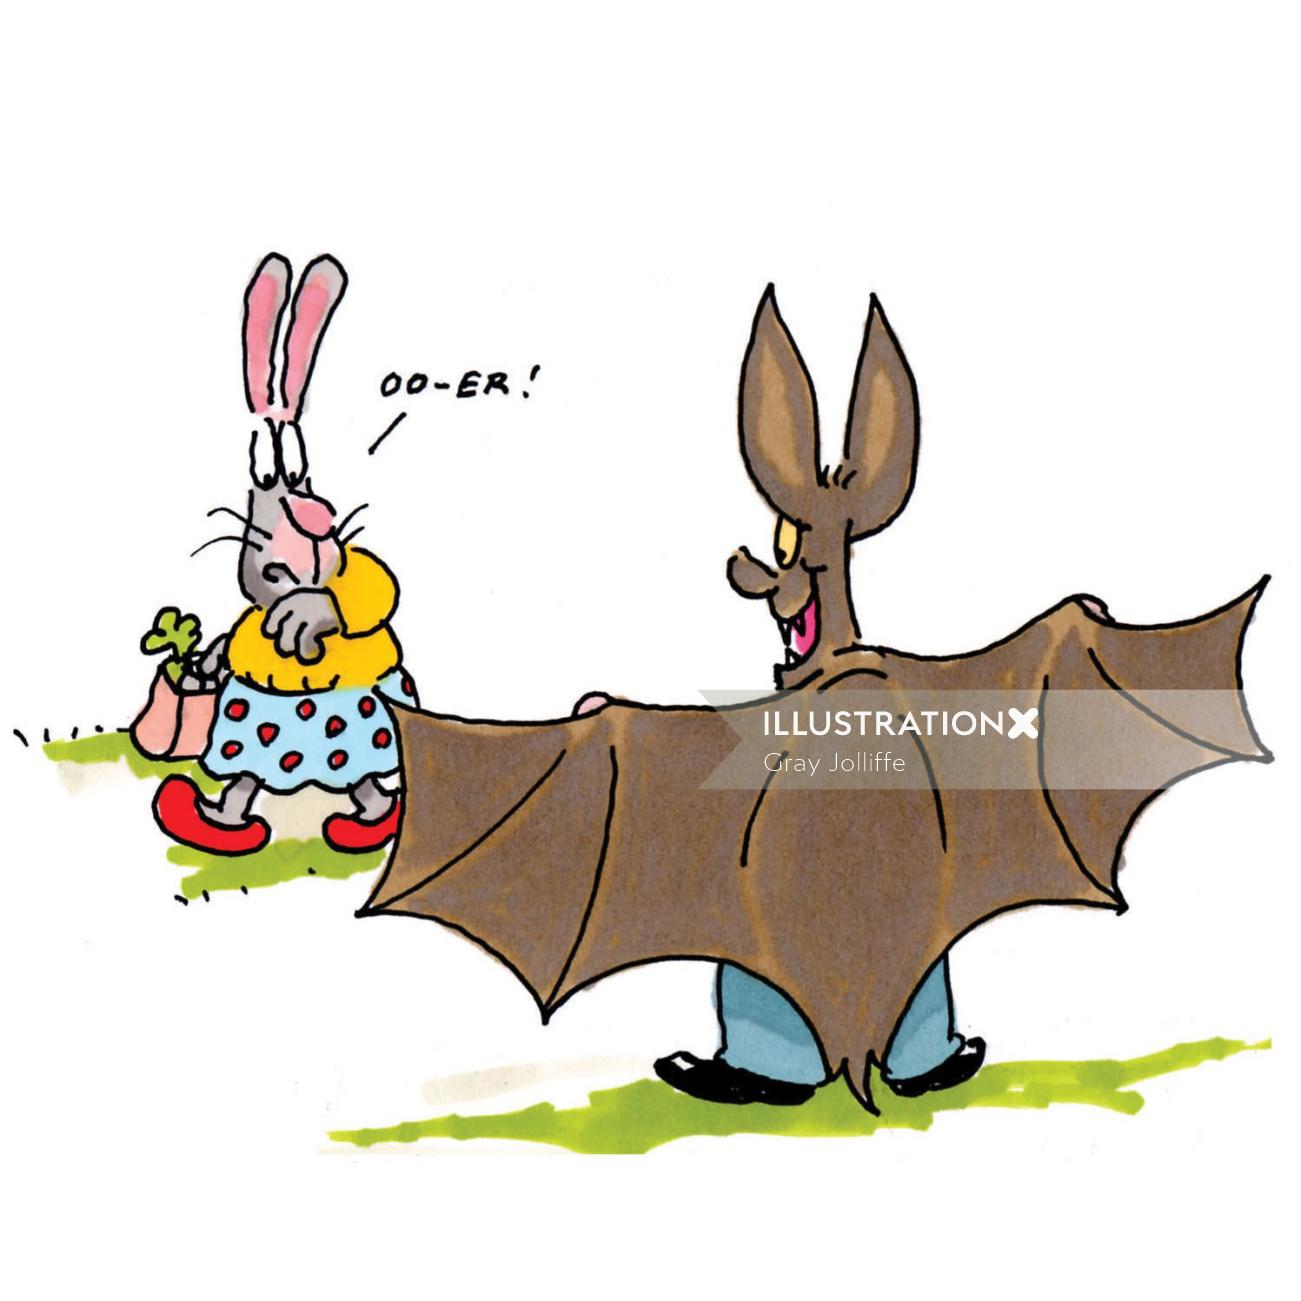 Cartoon of flashing bat - An illustration by Gray Jolliffe